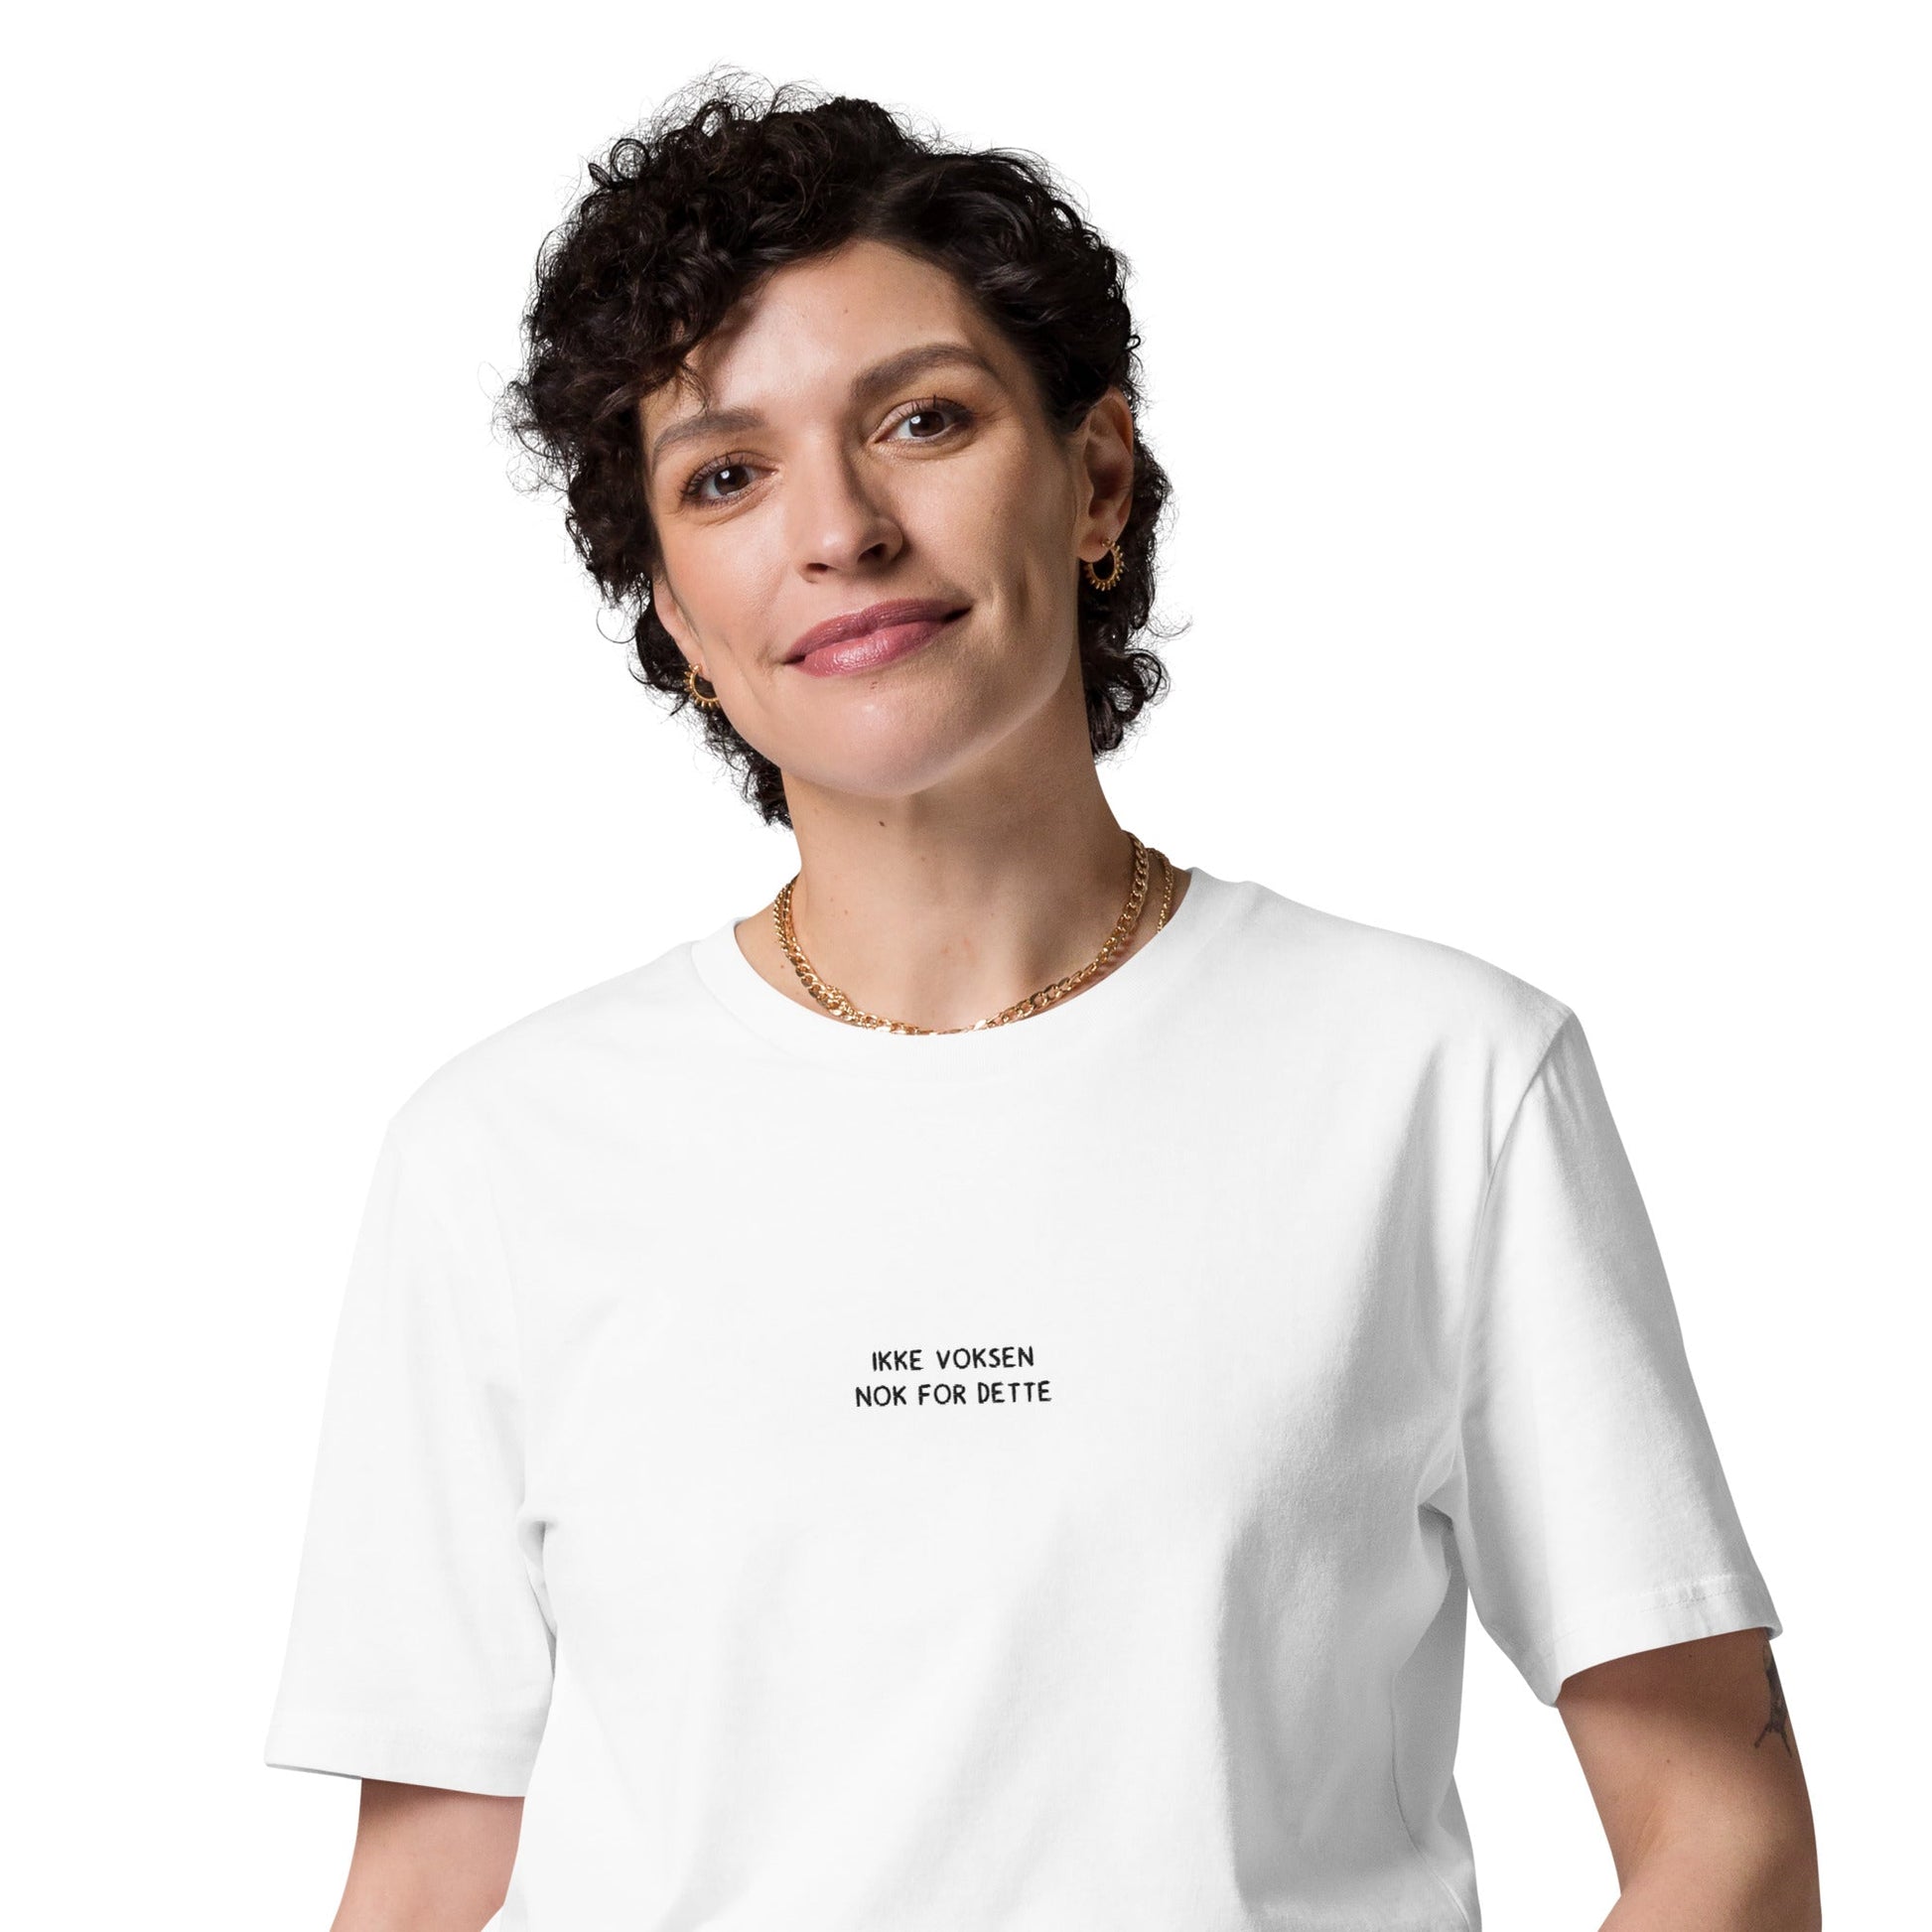 VAGPWR Ikke voksen black text - Unisex organic cotton t-shirt